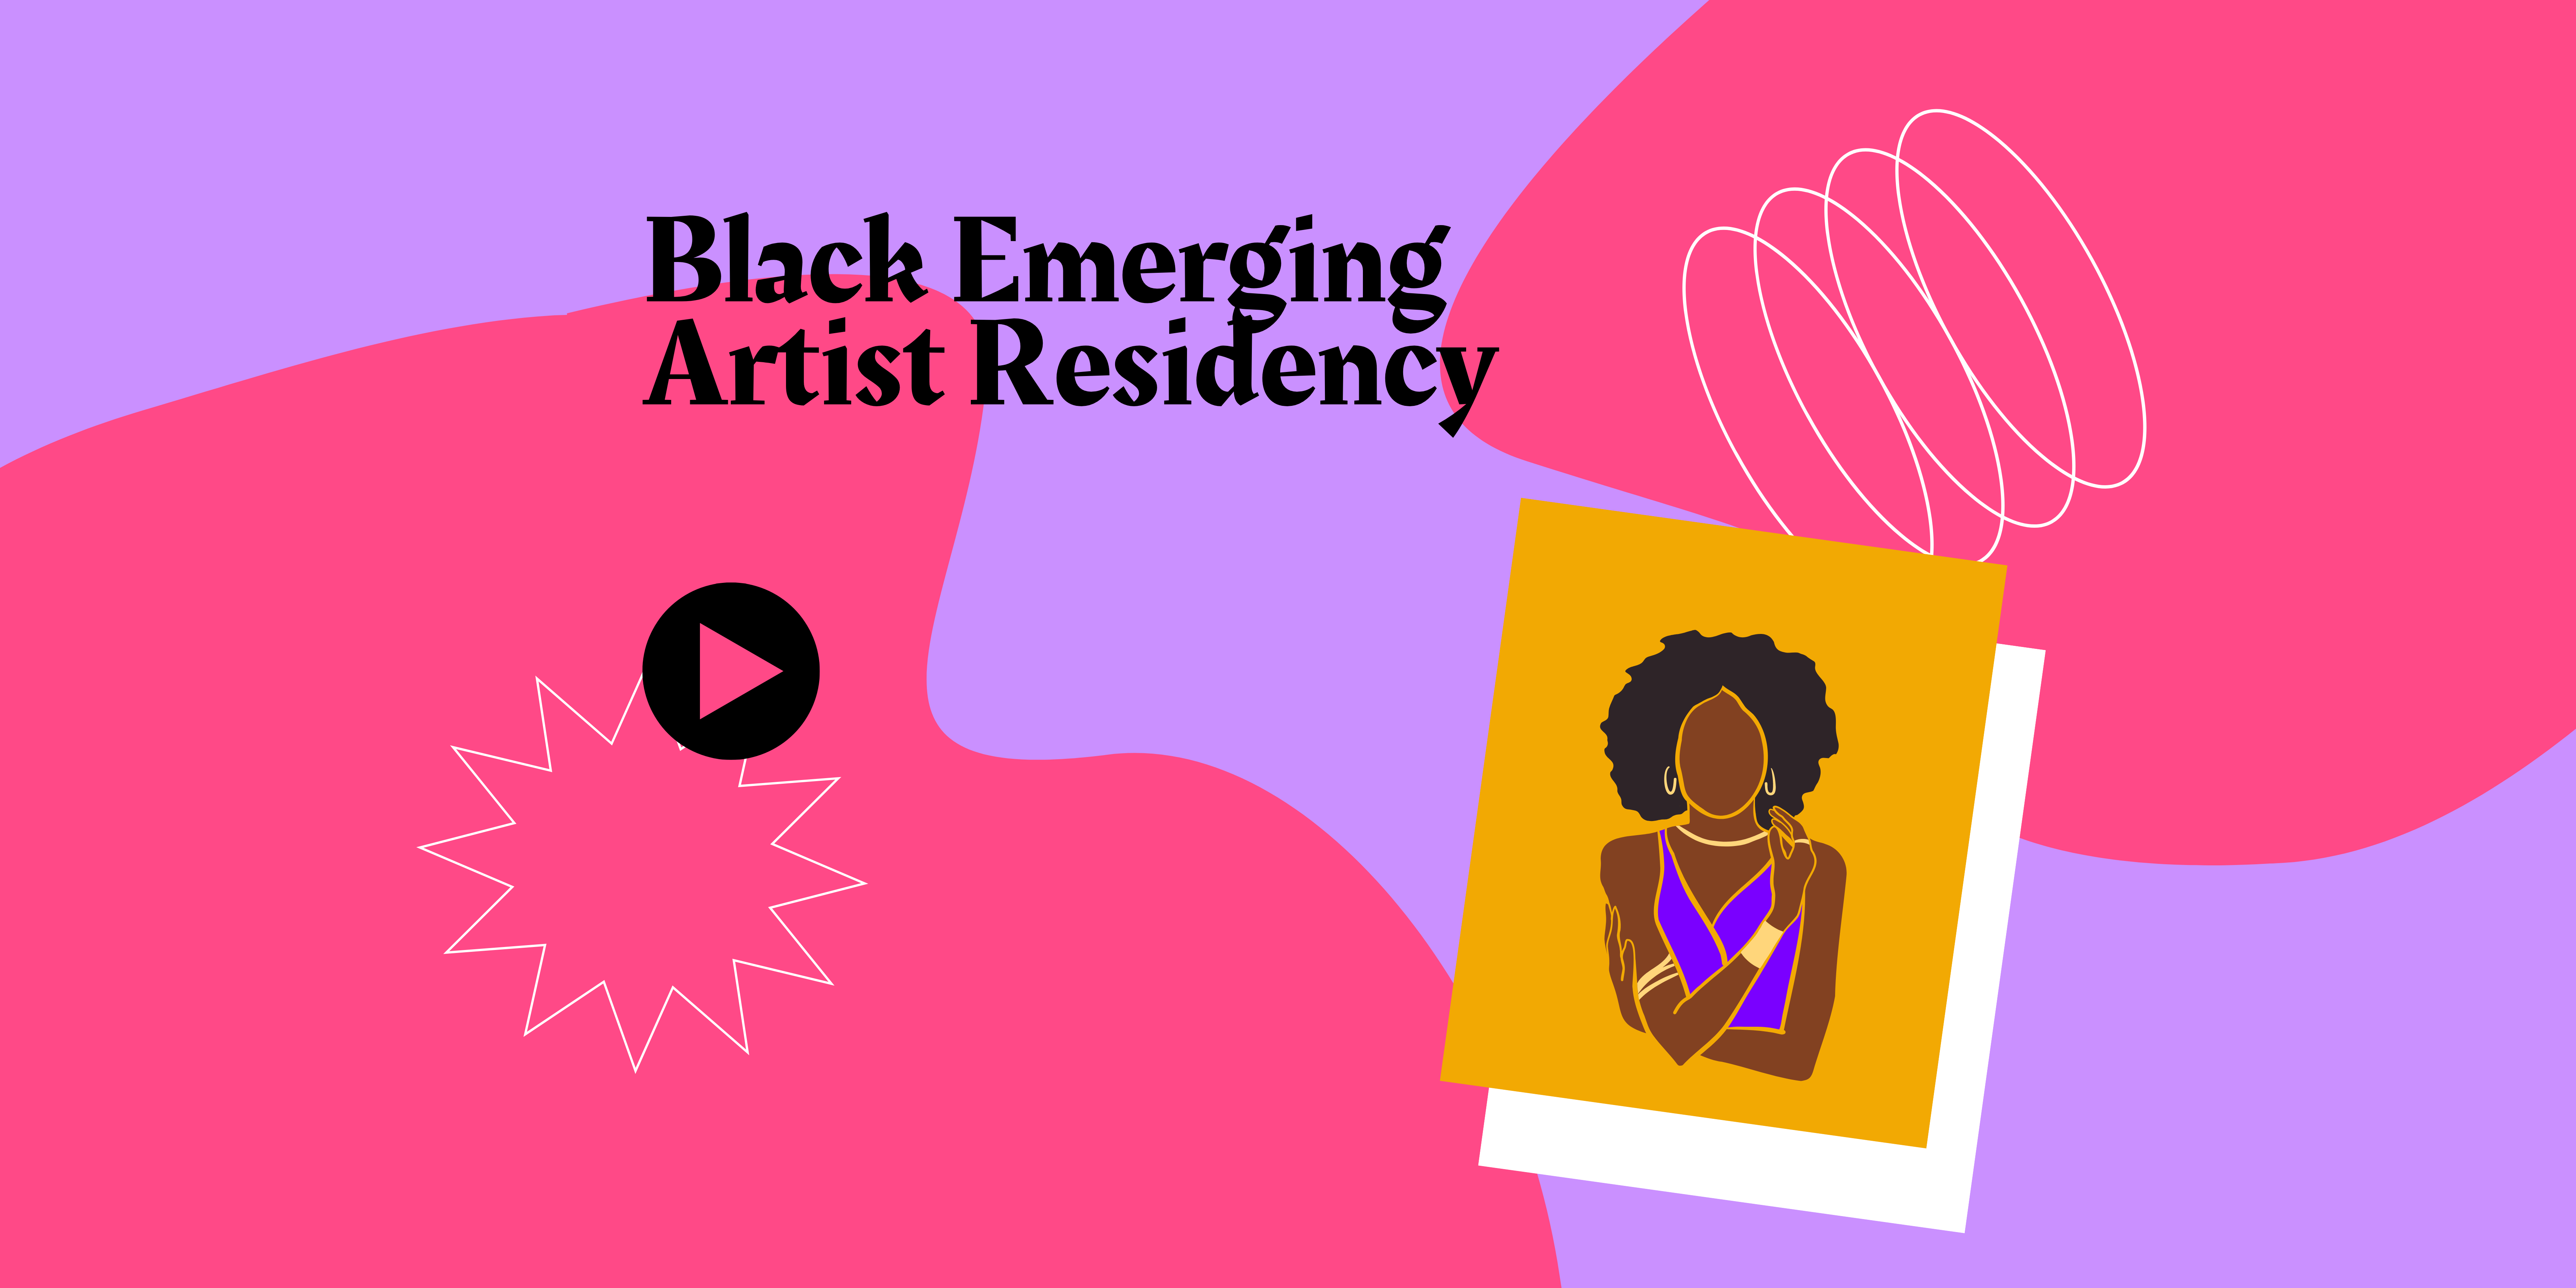 Black Emerging Artist Residency